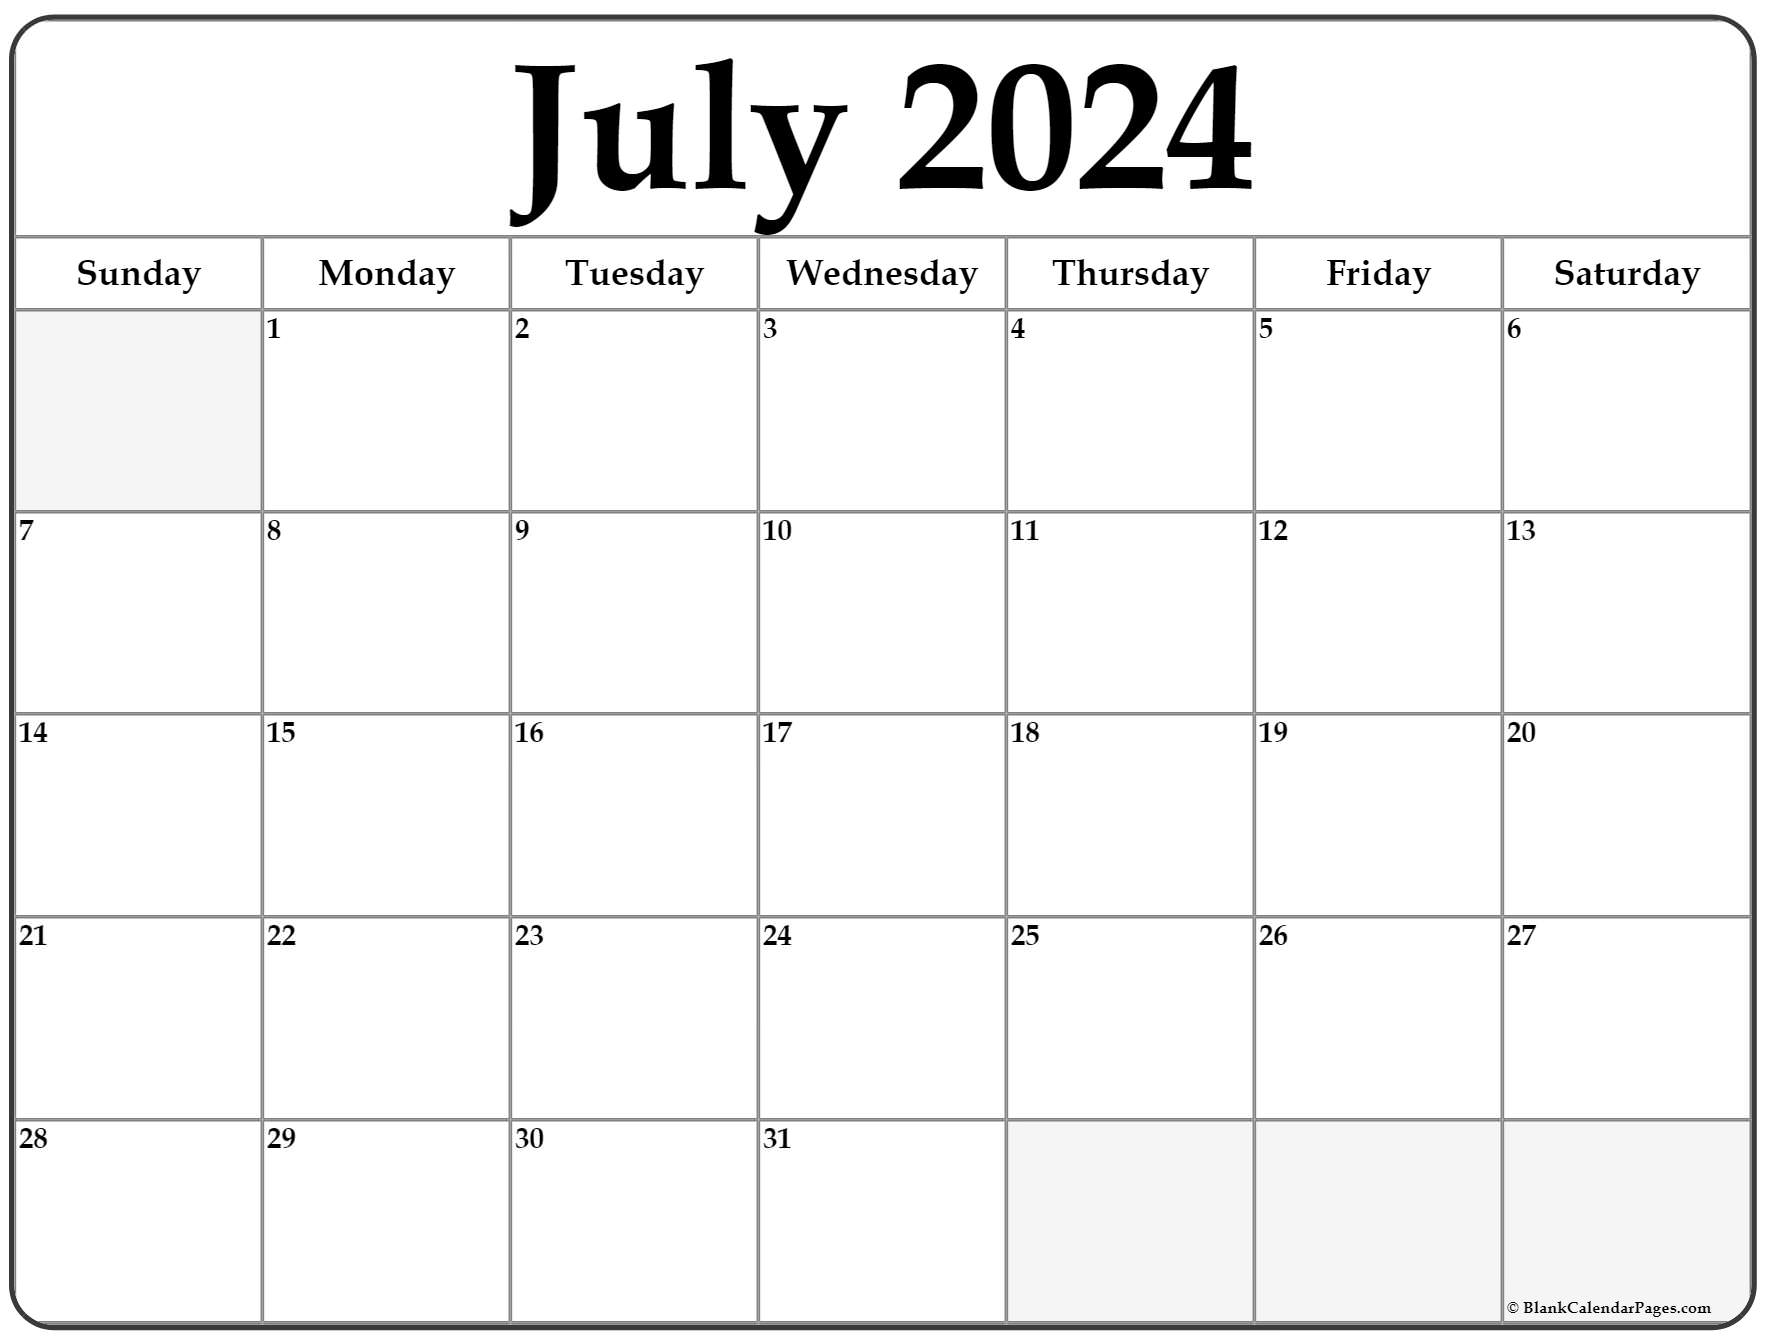 July 2024 Calendar | Free Printable Calendar for Summer 2024 Calendar Free Printable